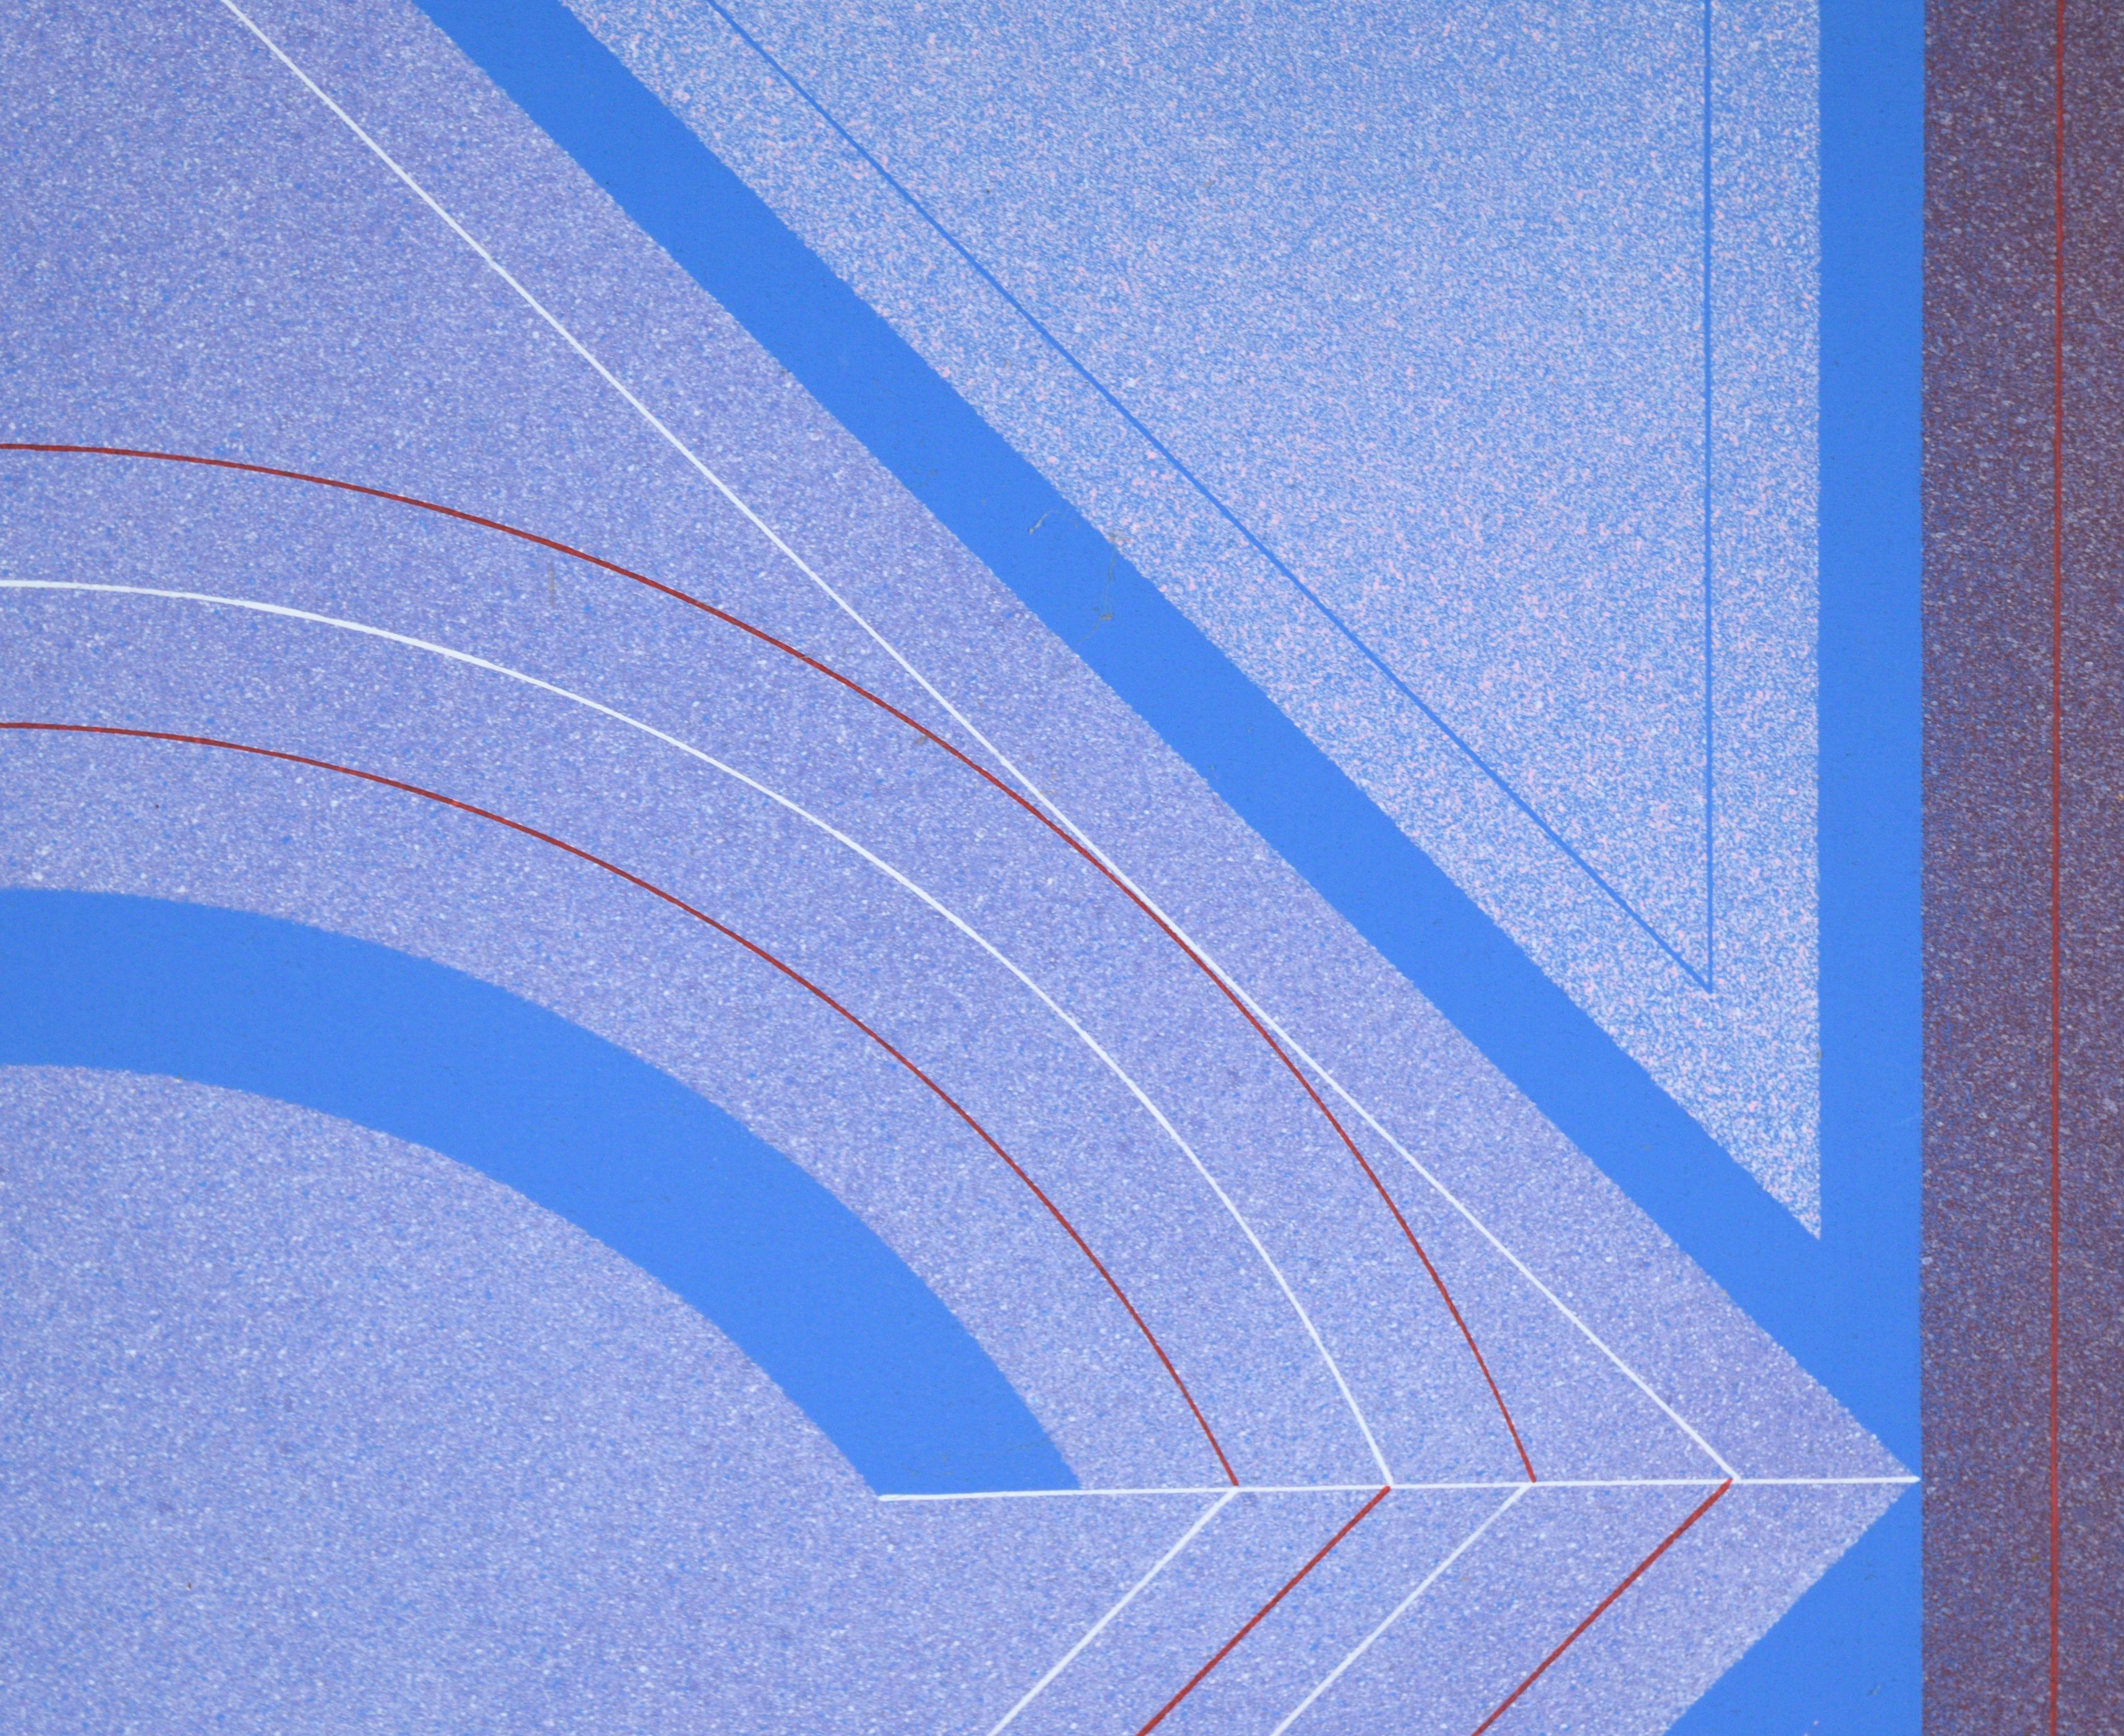 Minimalist geometric abstract by Santa Cruz, California artist Arn Ghigliazza (American, b.1937). Presented in a painted slat-wood frame. Titled 